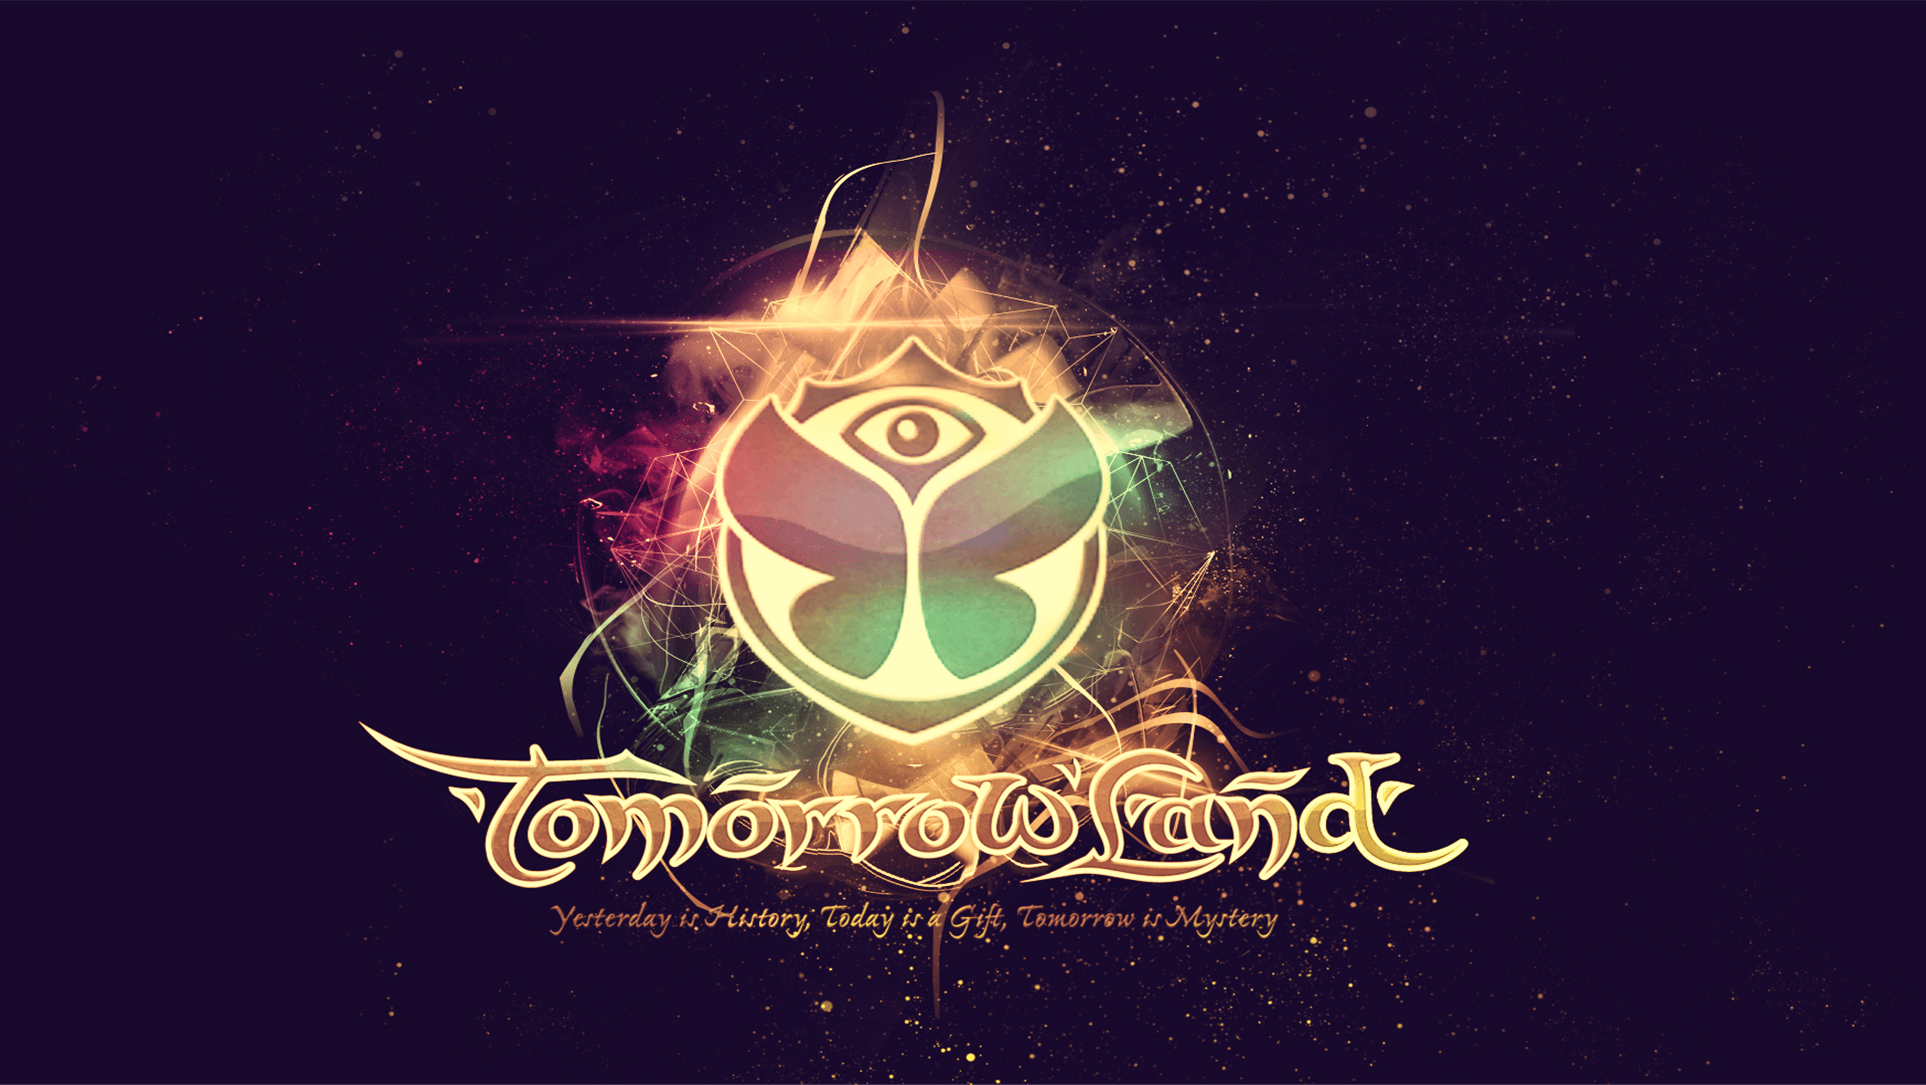 Tomorrowland Logo - Tomorrowland 2014 Belgium Electronic Music Festival Logo Free ...